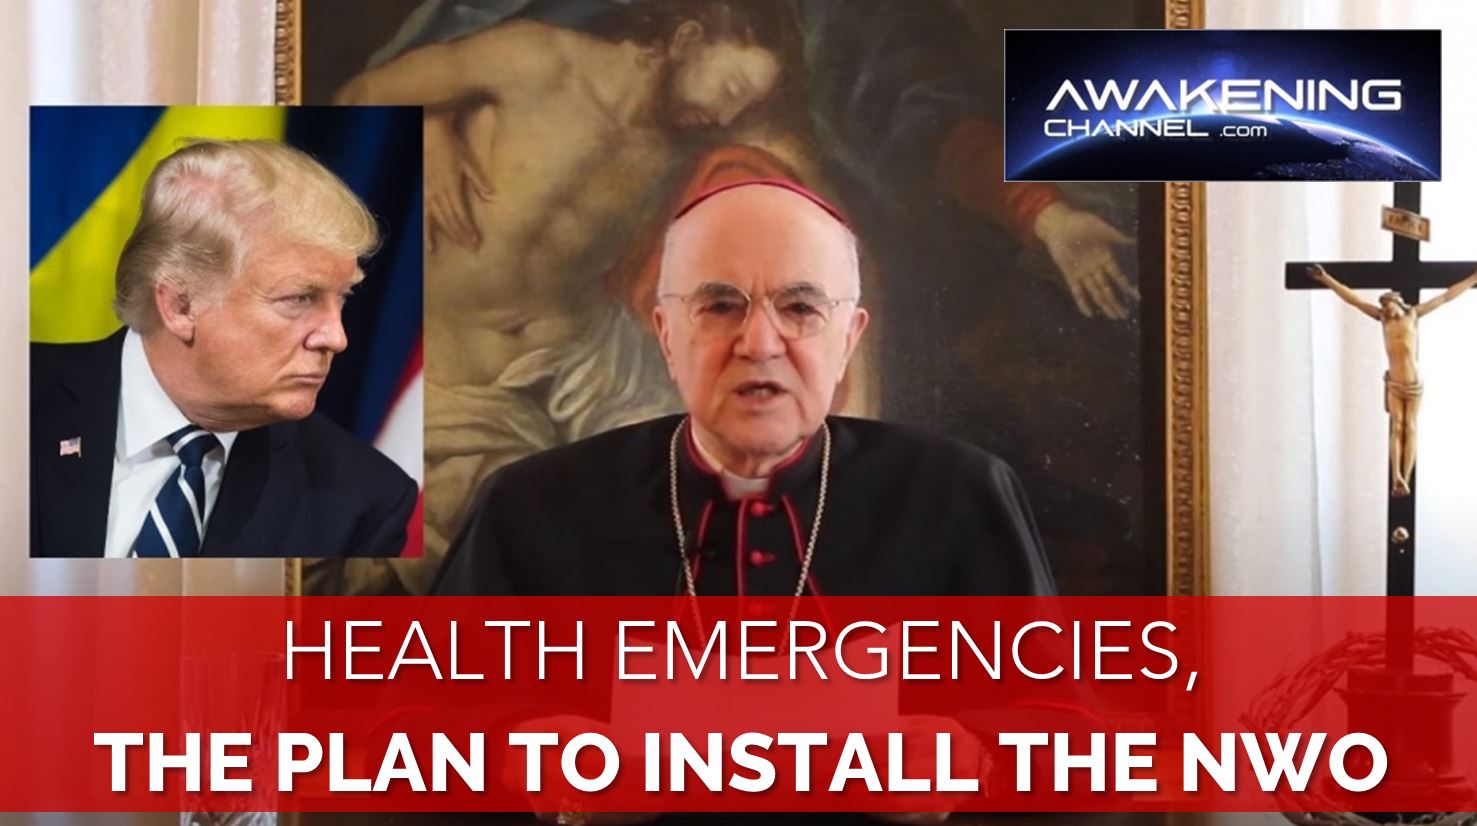 Health emergencies are a global plan to install the NWO. – Former US Vatican ambassador warns Trump